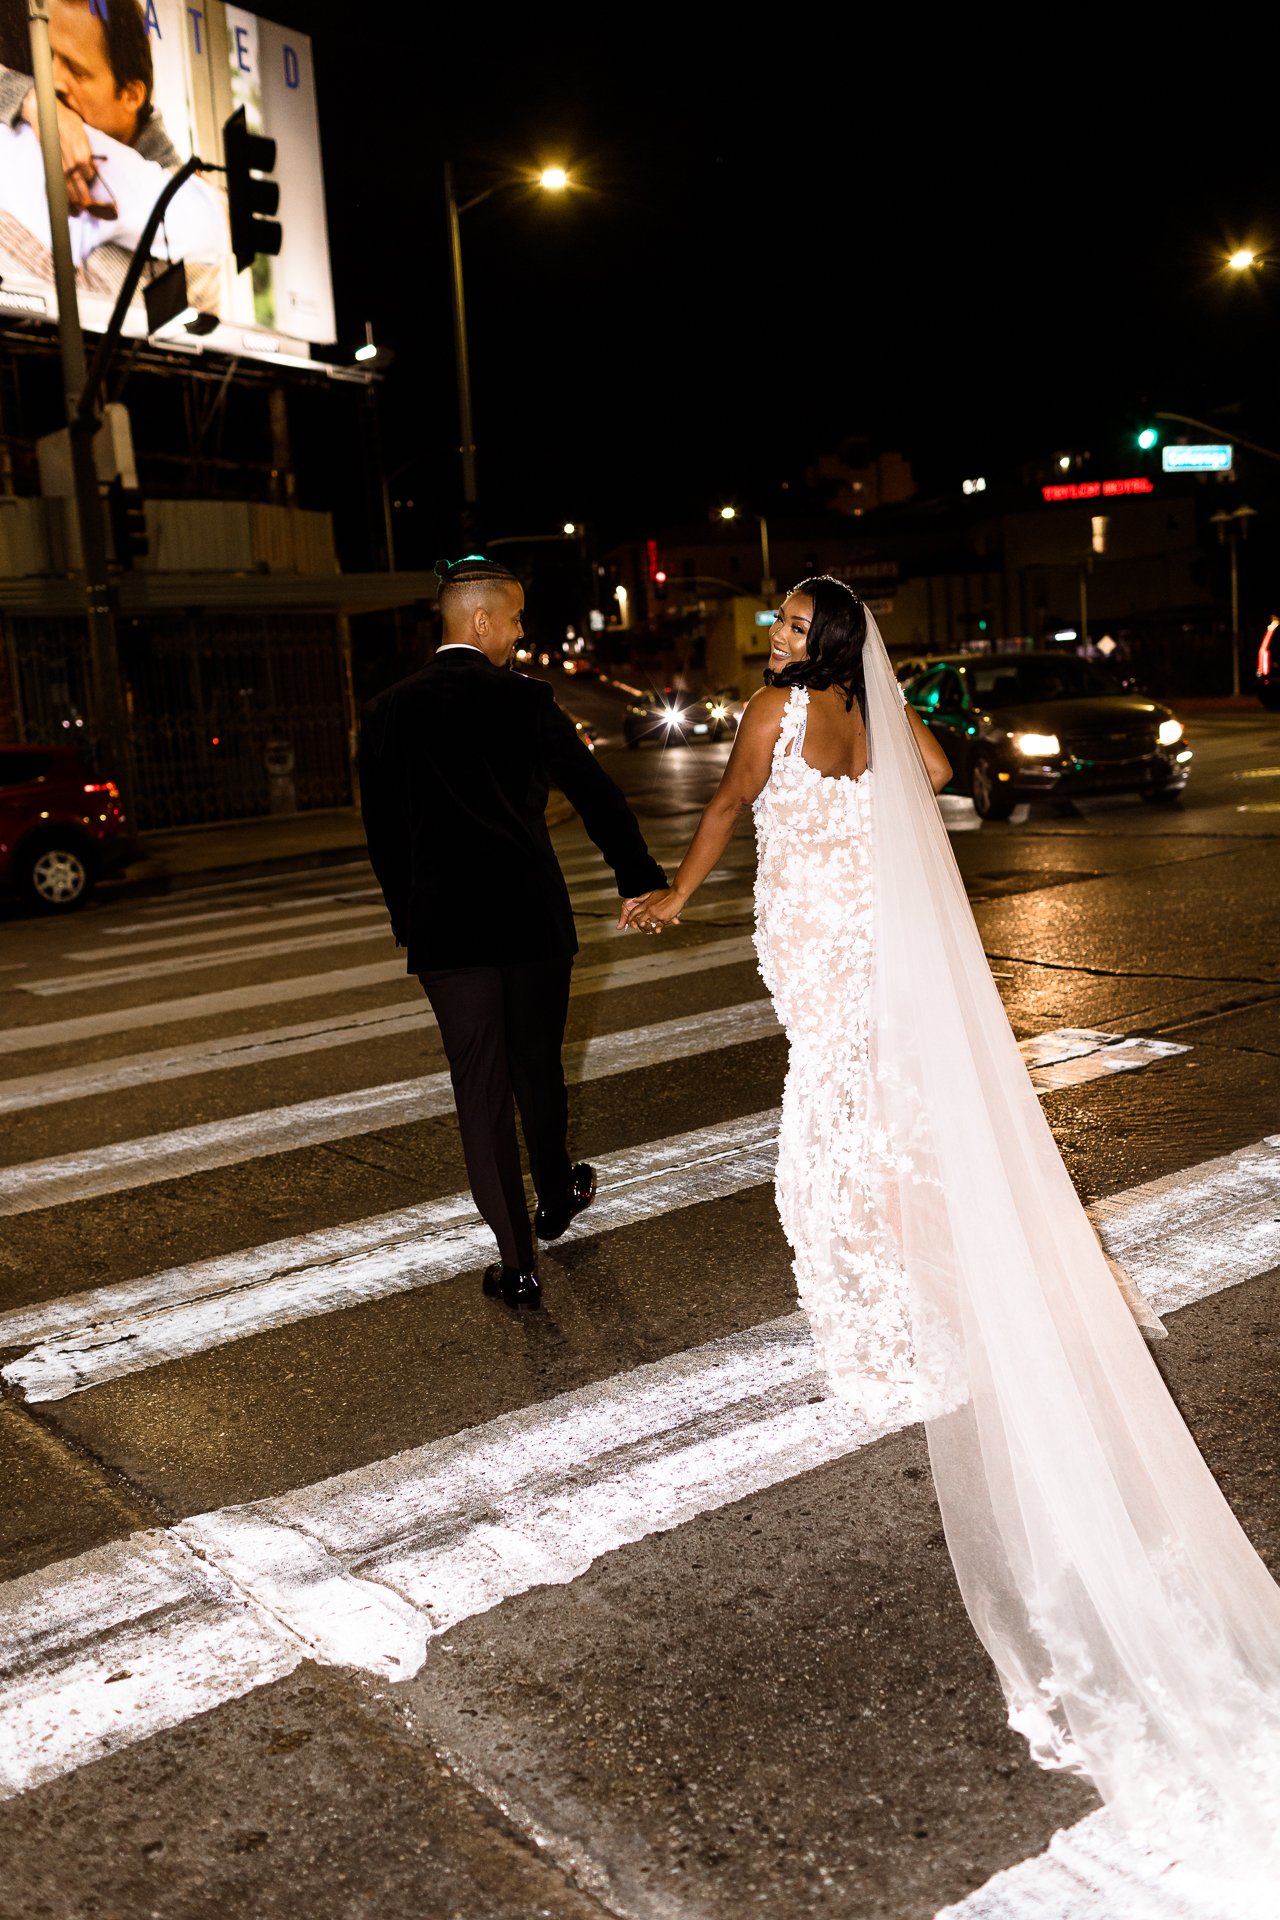 urban city nighttime flash photos of bride and groom